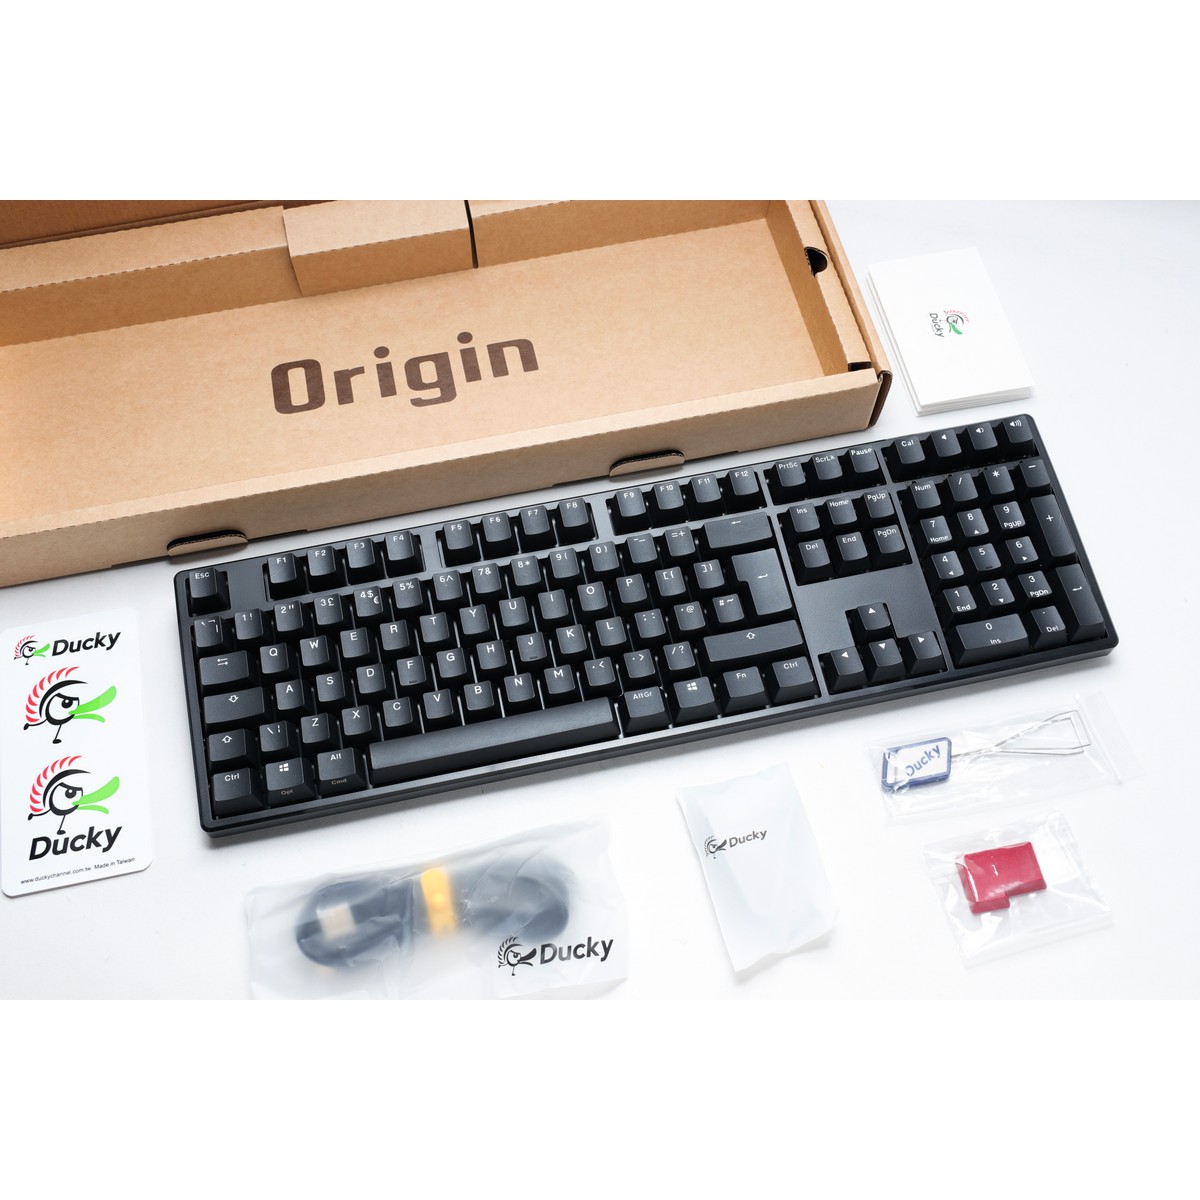 Ducky - Ducky Origin USB Mechanical Gaming Keyboard Cherry MX Black - Black UK Layout